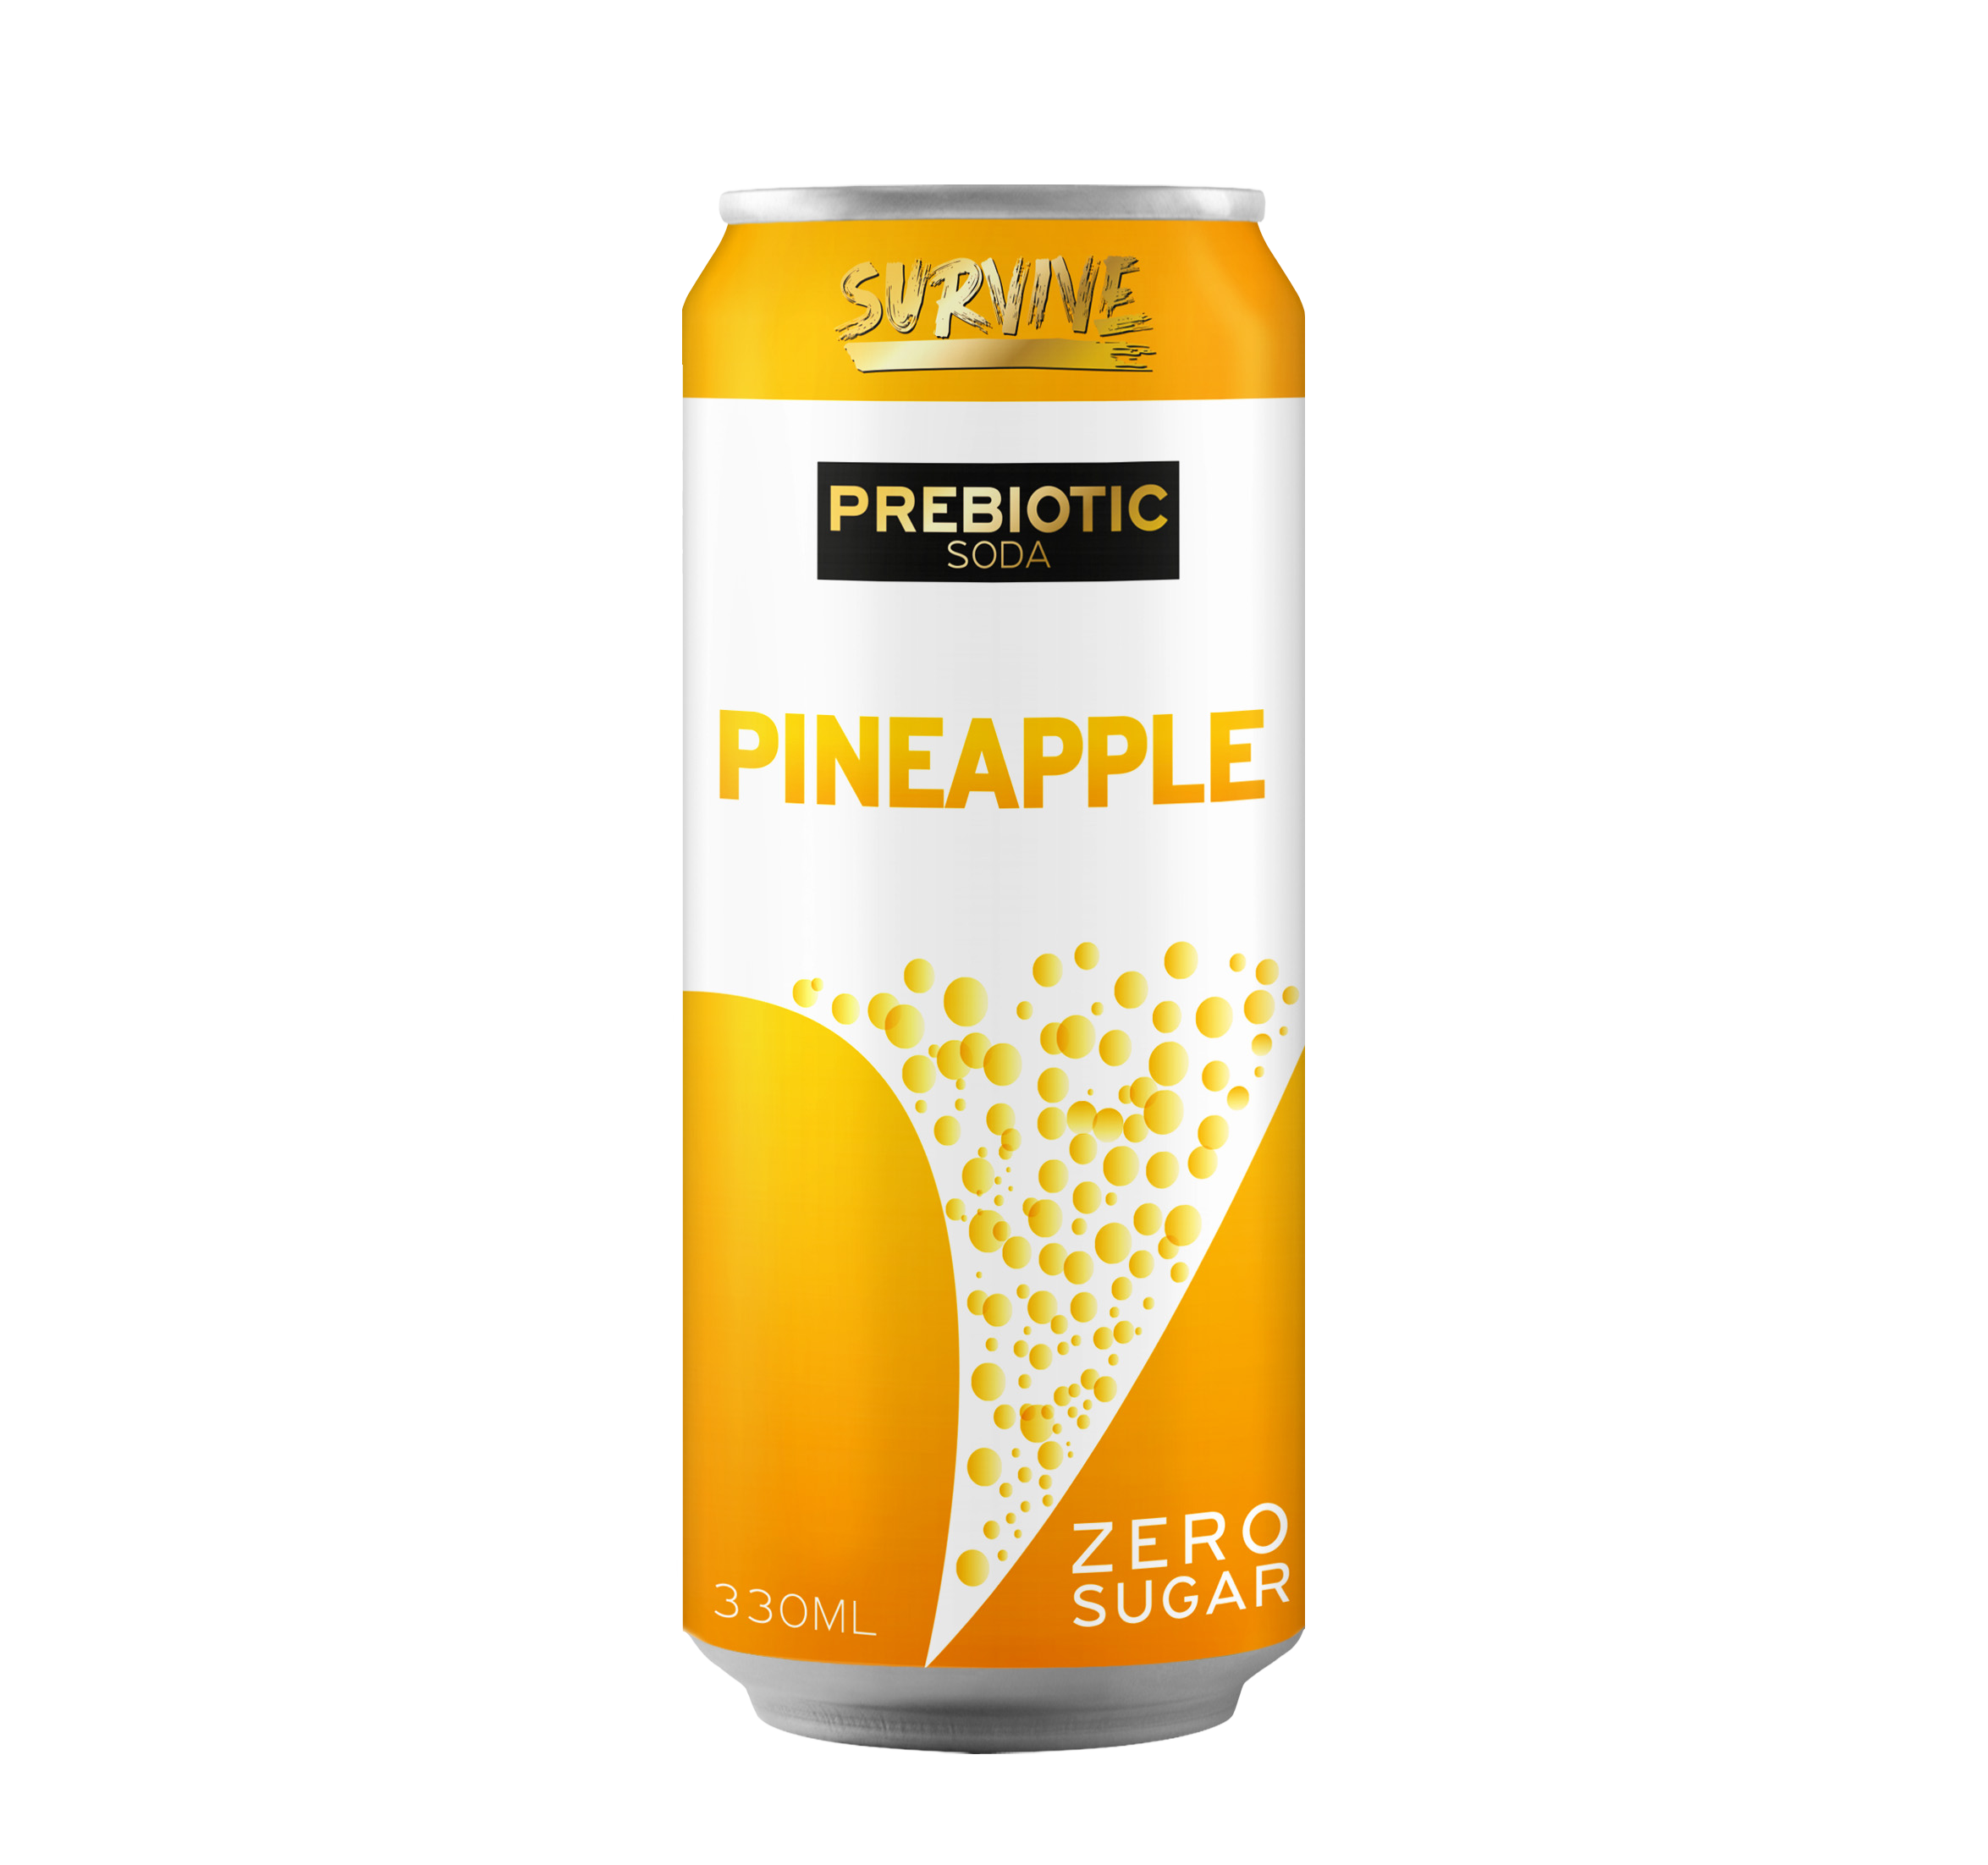 Survive prebiotic Soda Pineapple